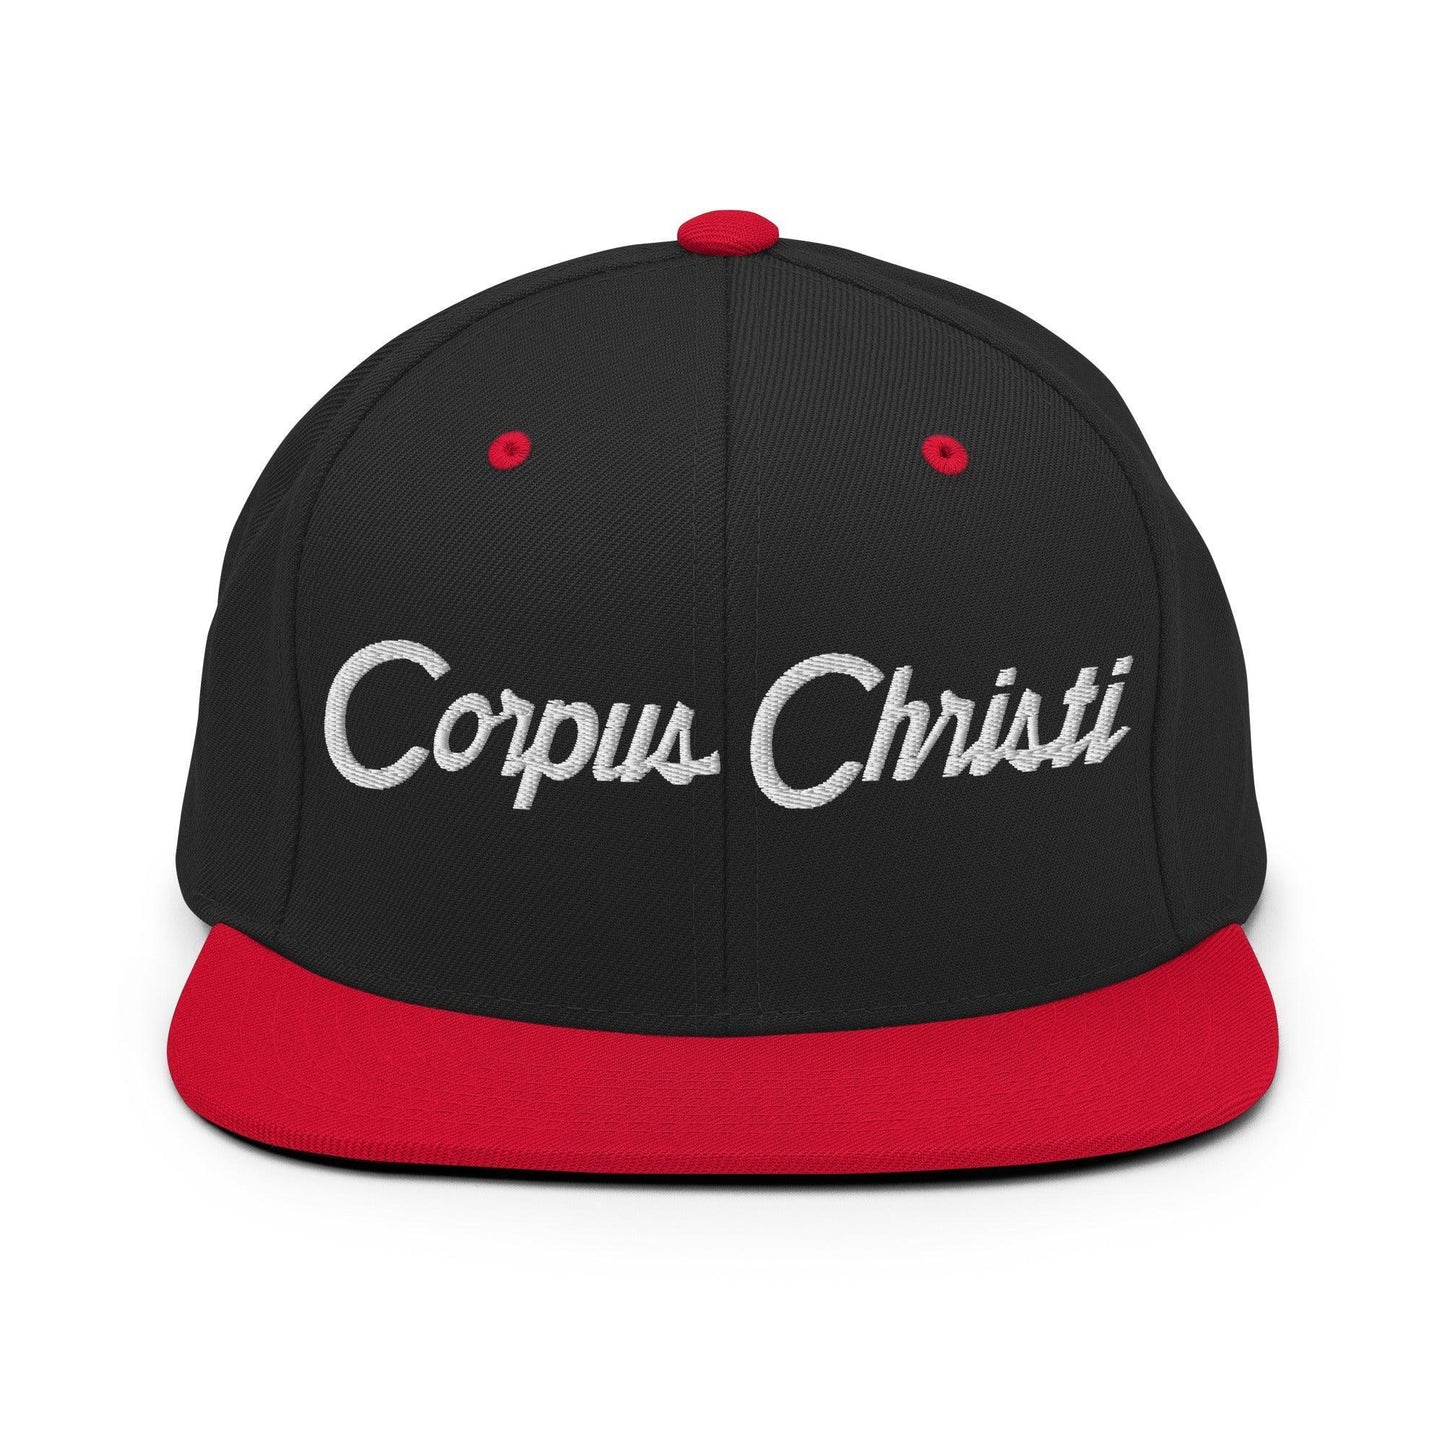 Corpus Christi Script Snapback Hat Black Red